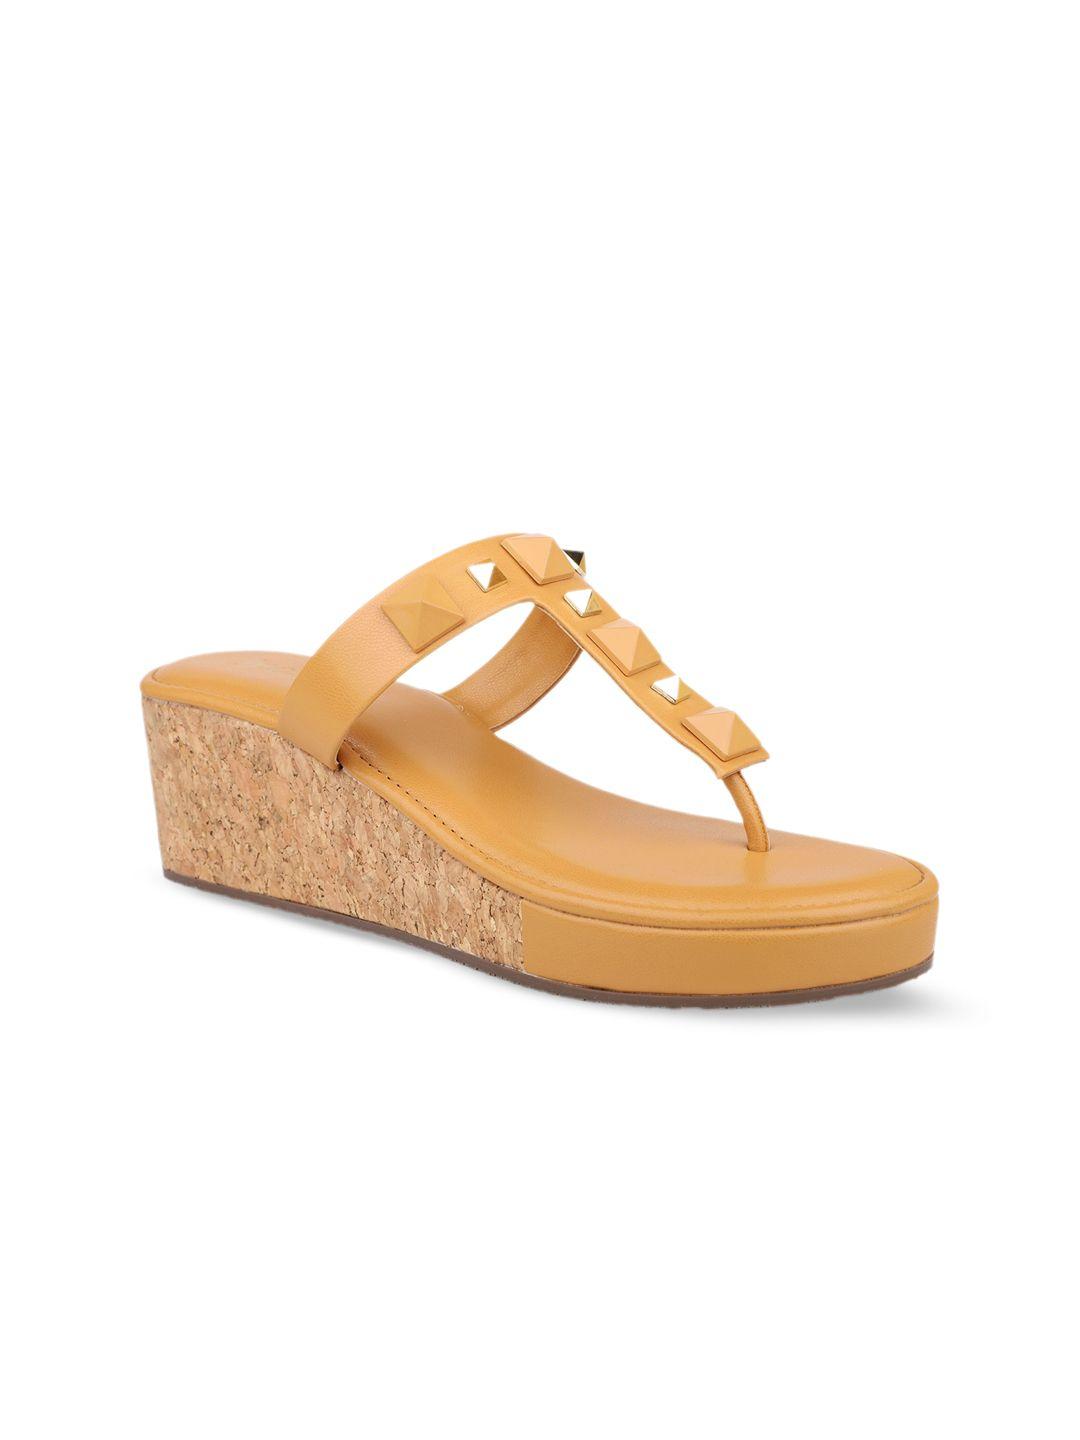 inc-5-mustard-flatform-sandals